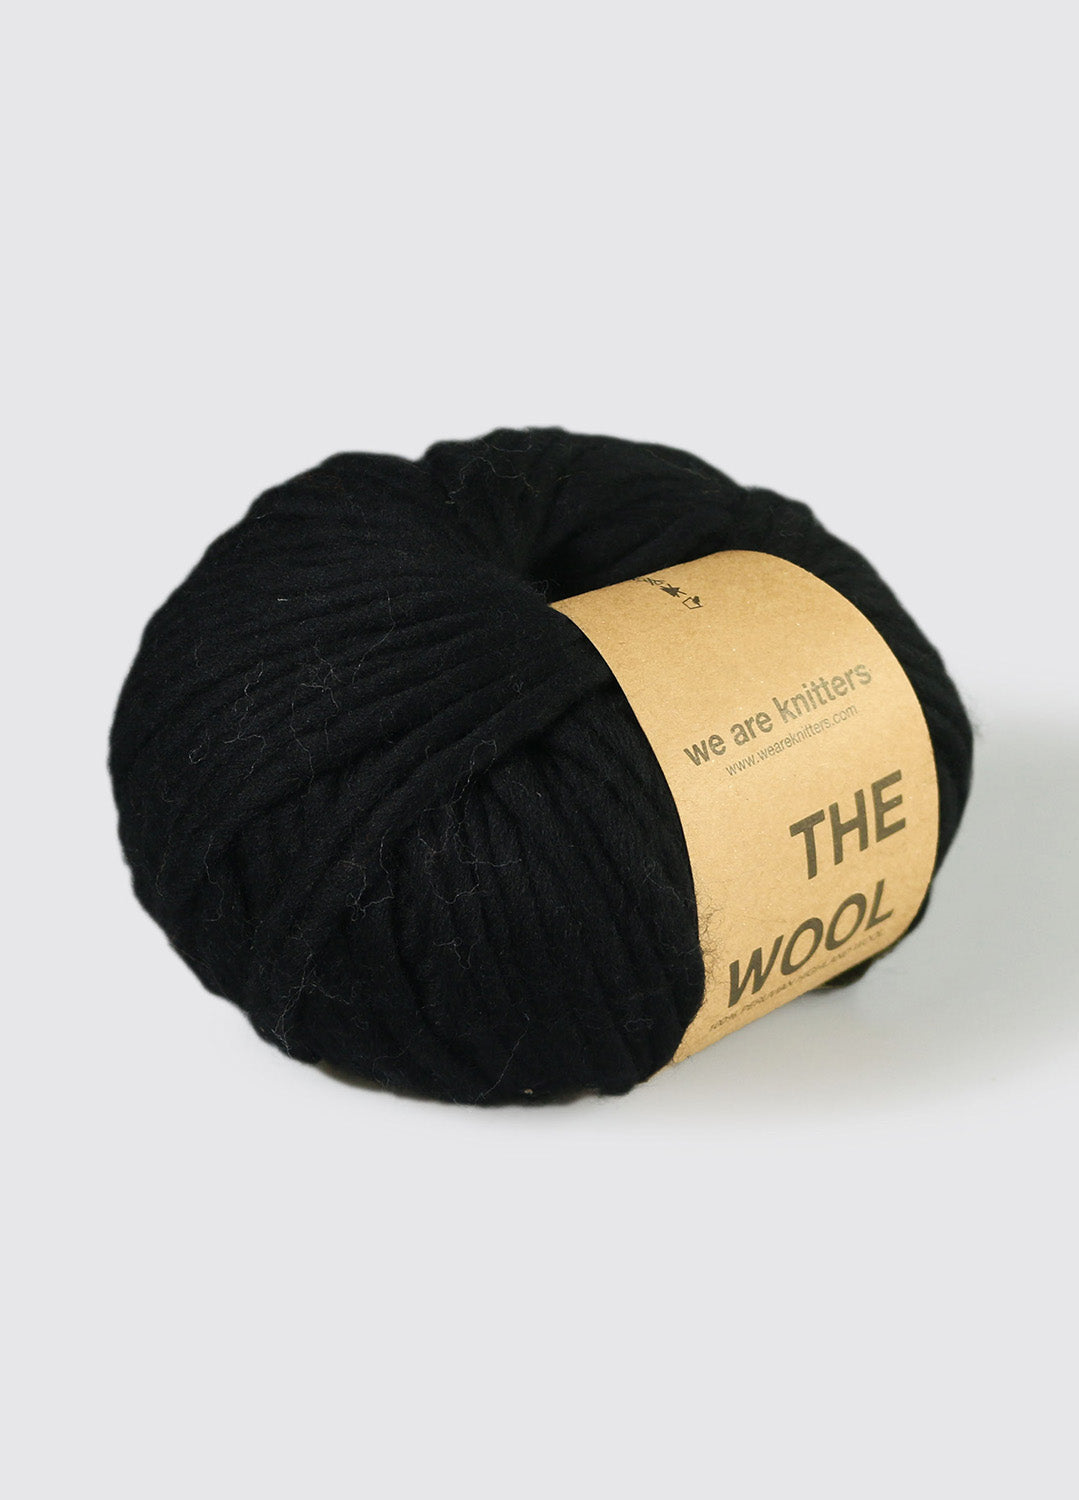 The Wool Black